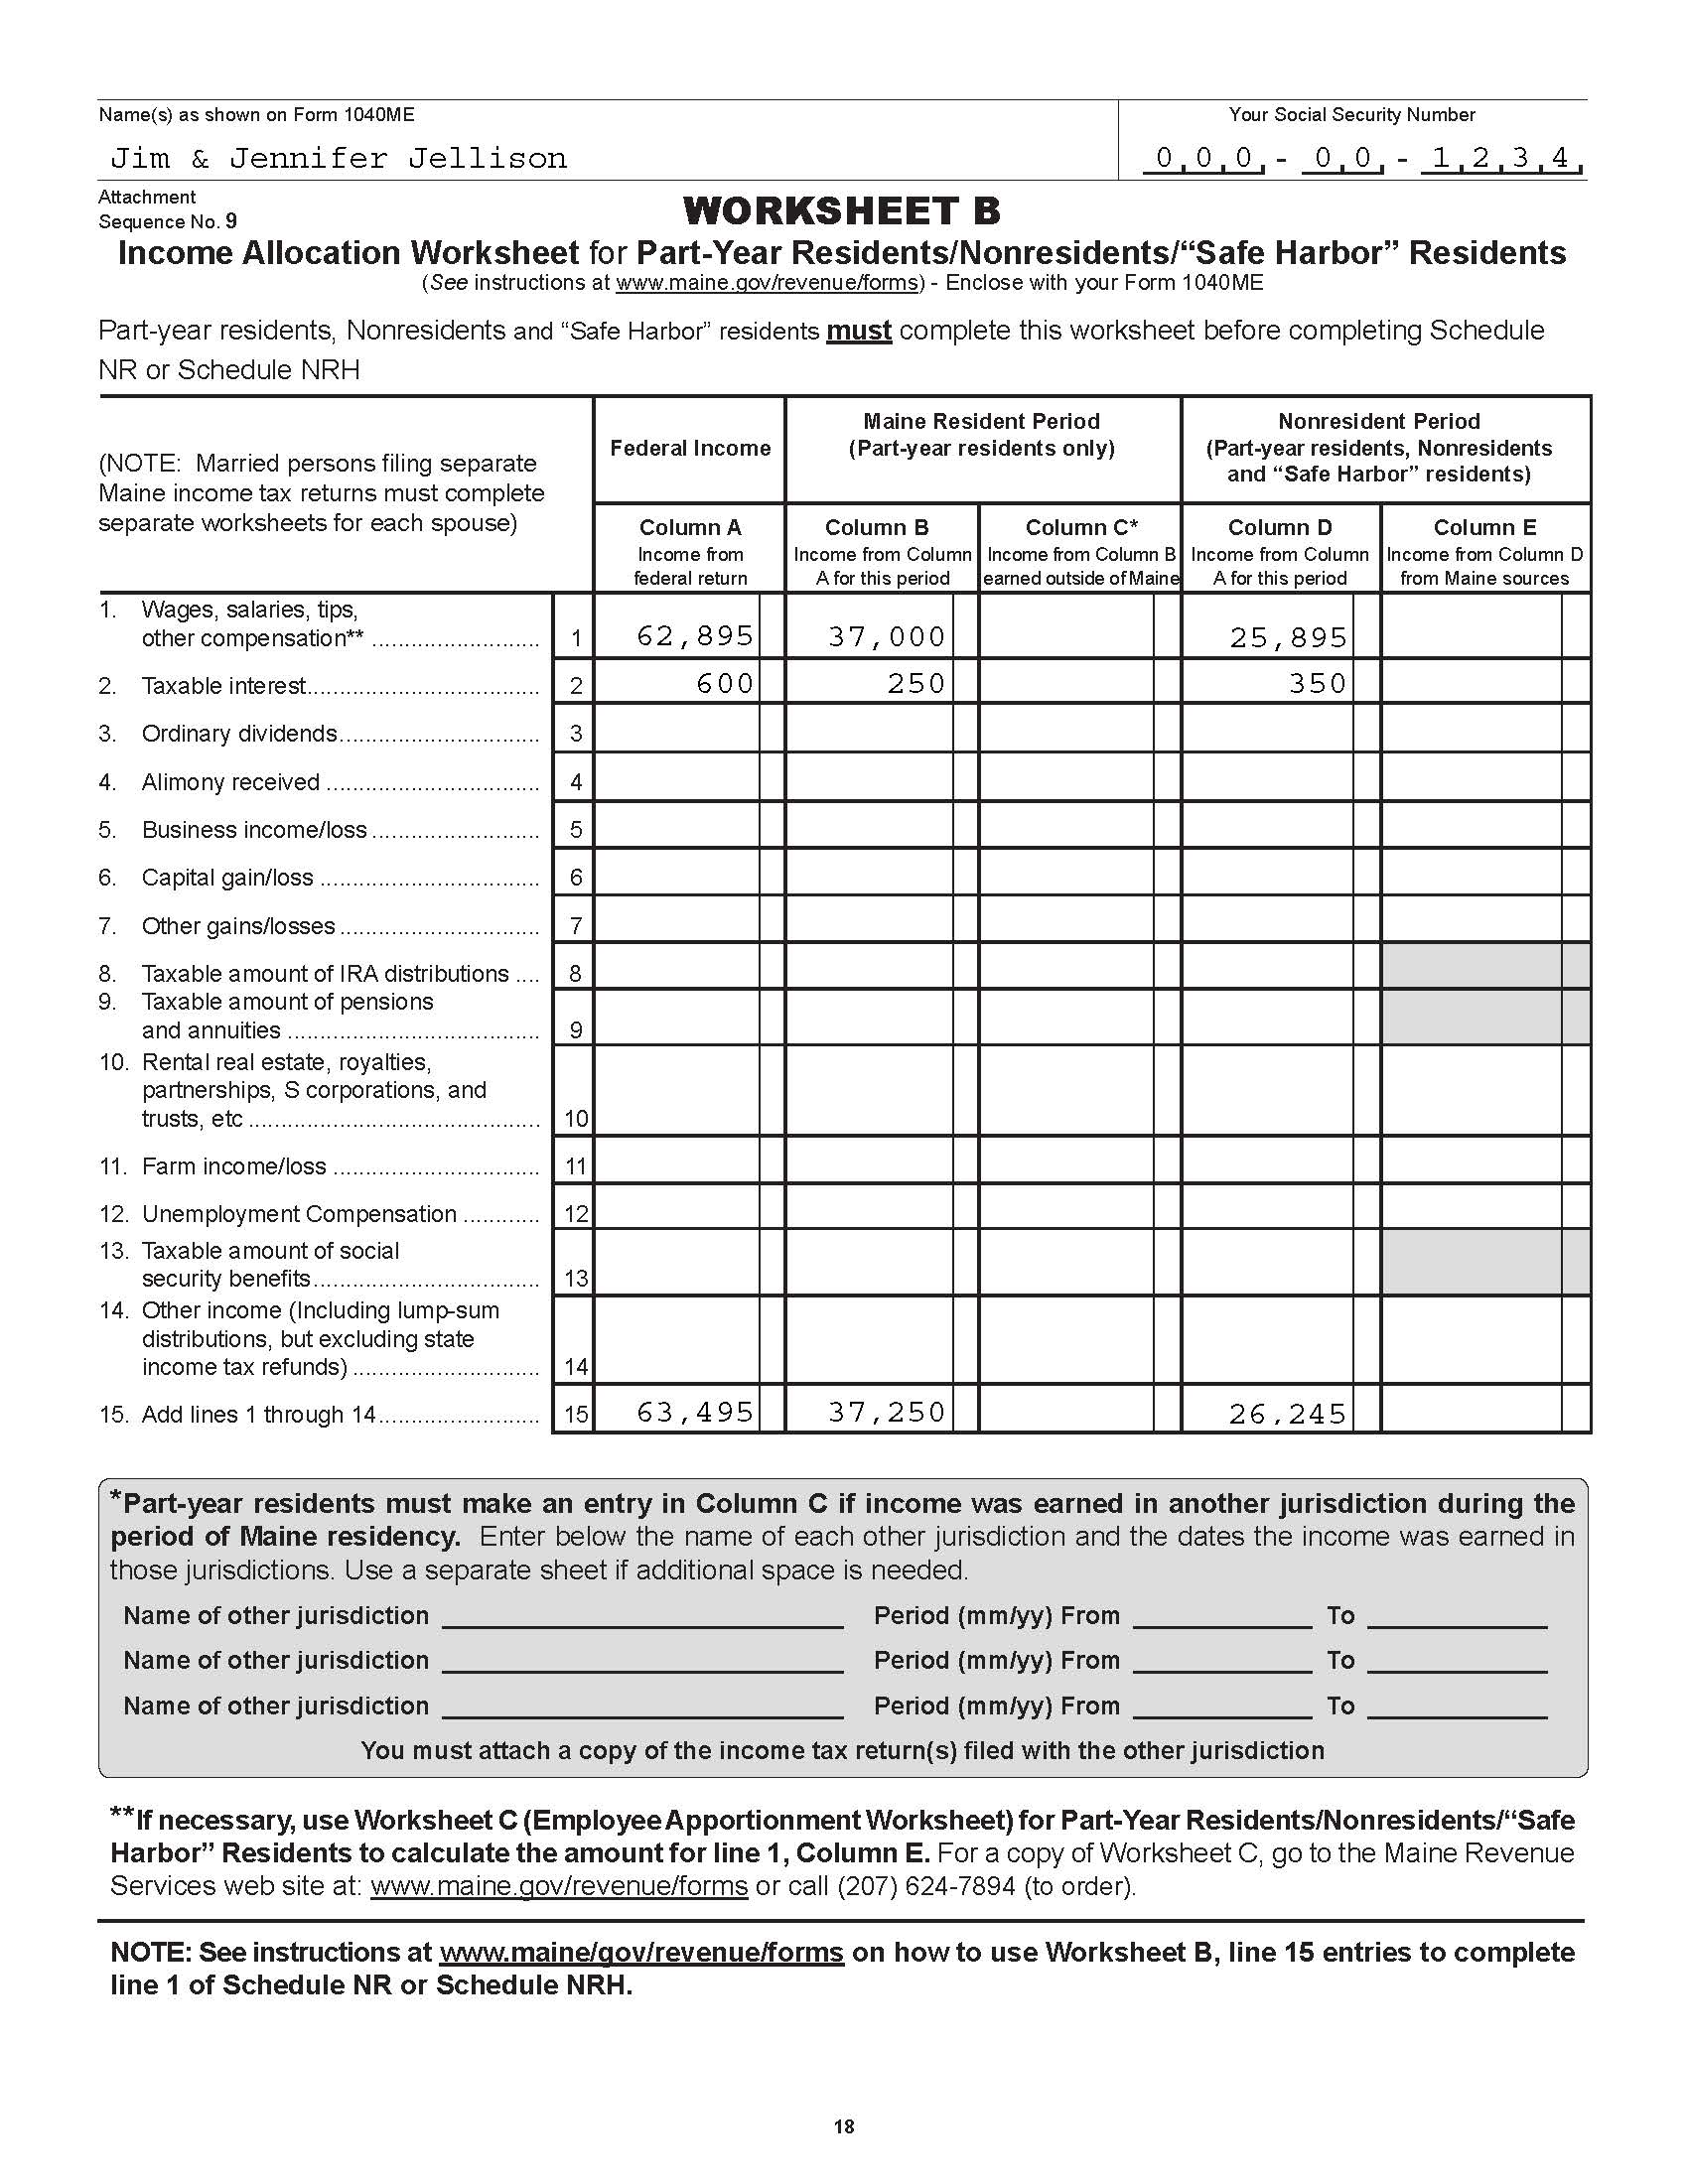 ssvf-income-eligibility-calculation-worksheet